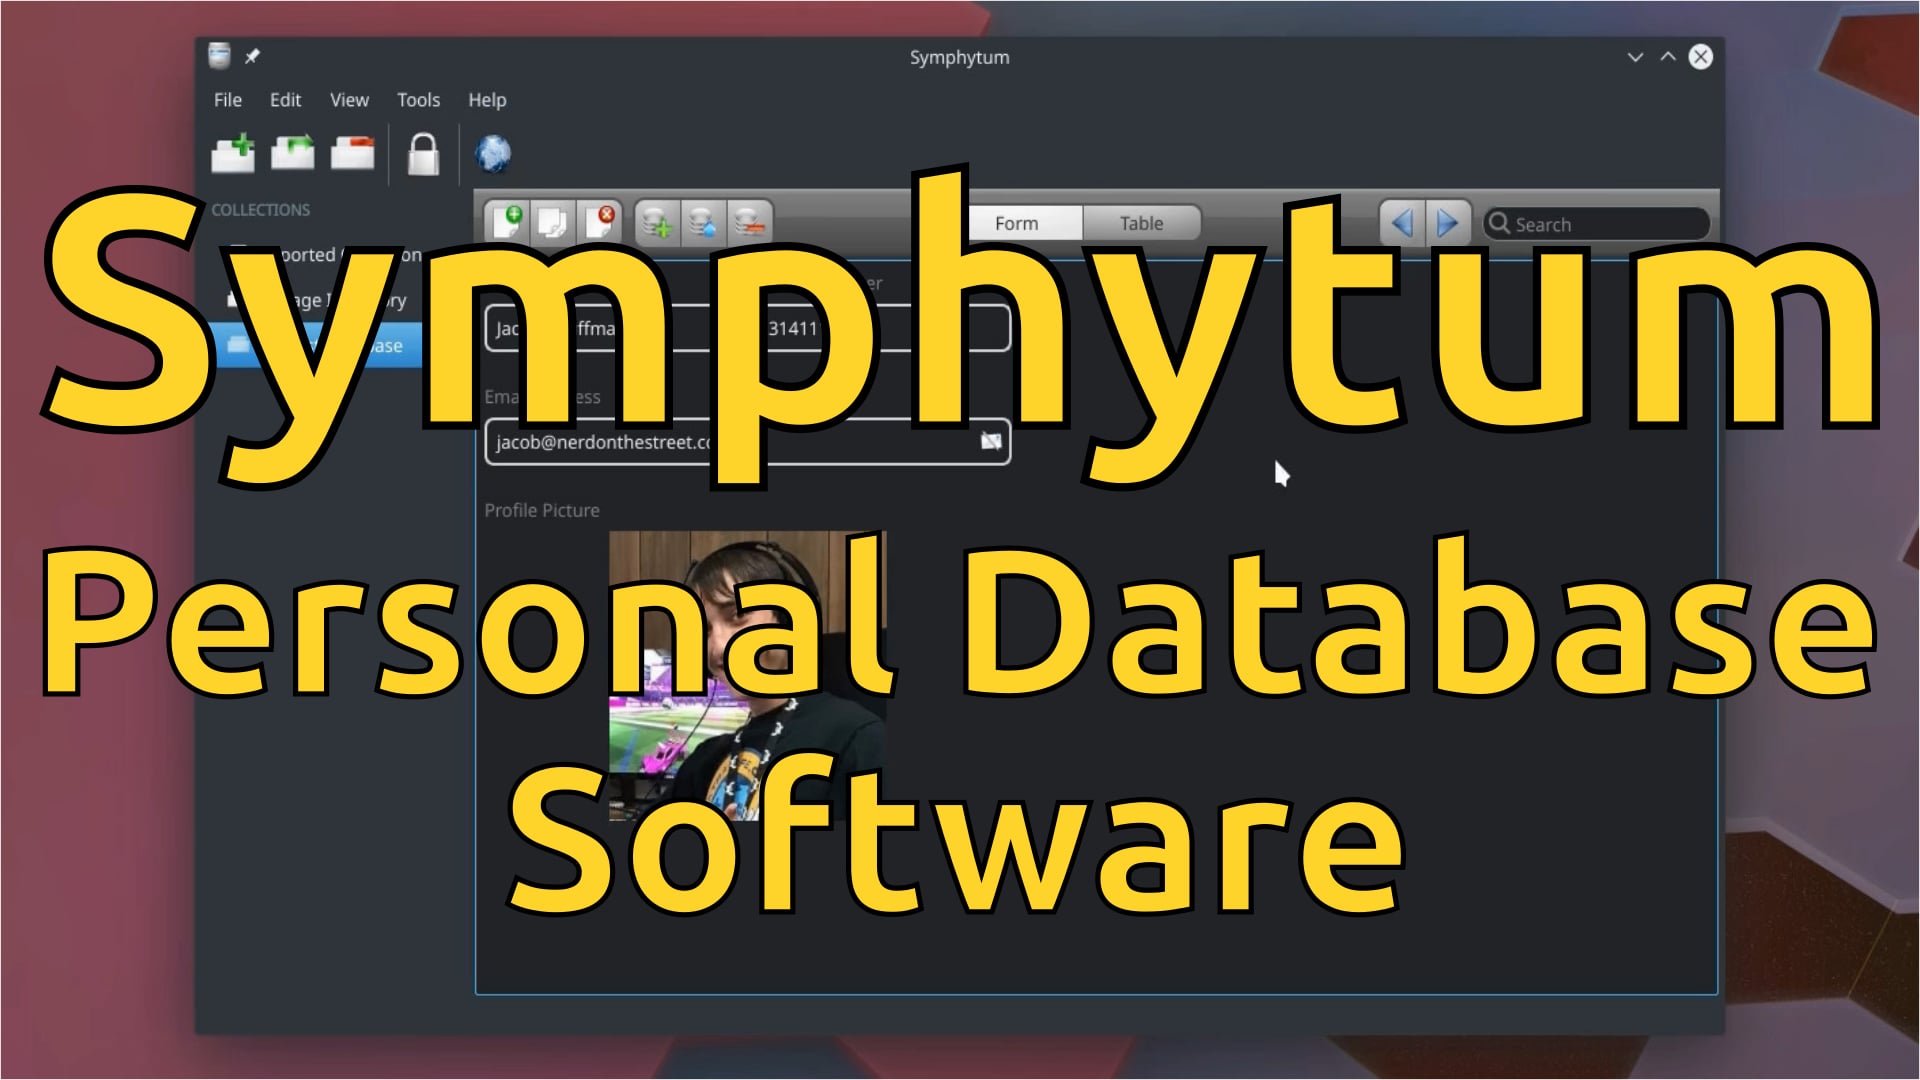 Symphytum - Personal Database Software